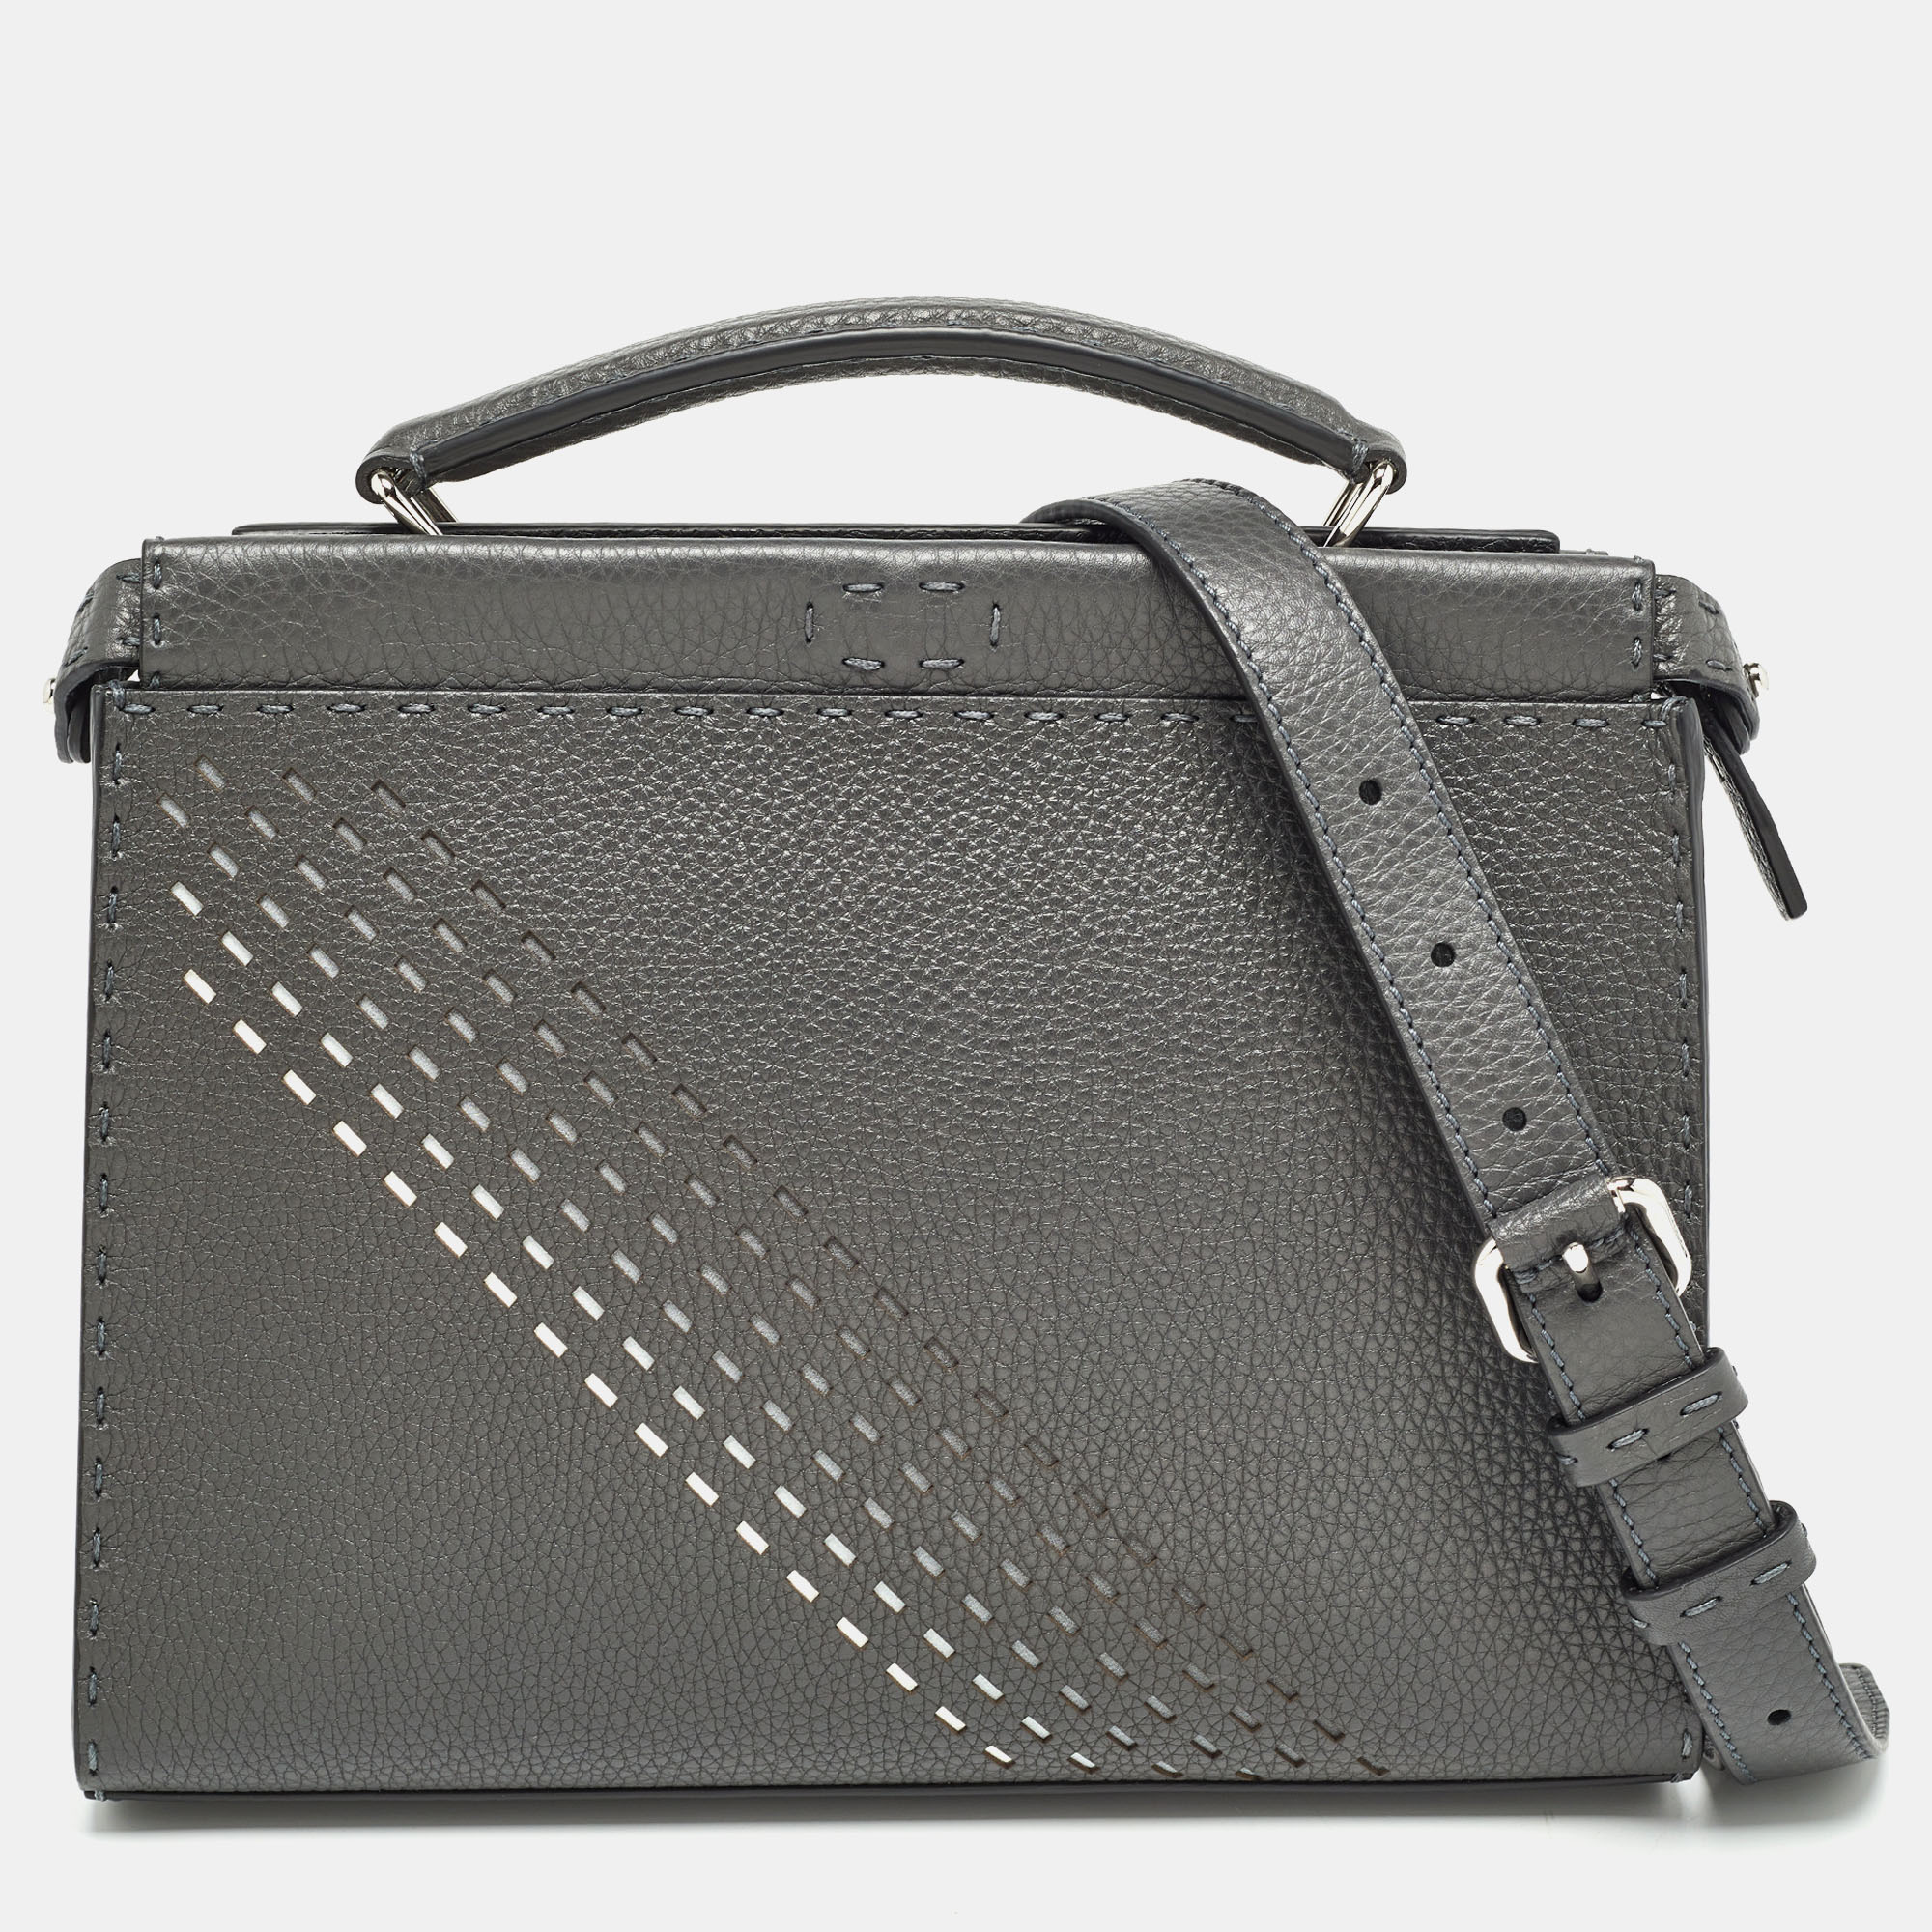 Fendi grey selleria leather mini fit top handle bag